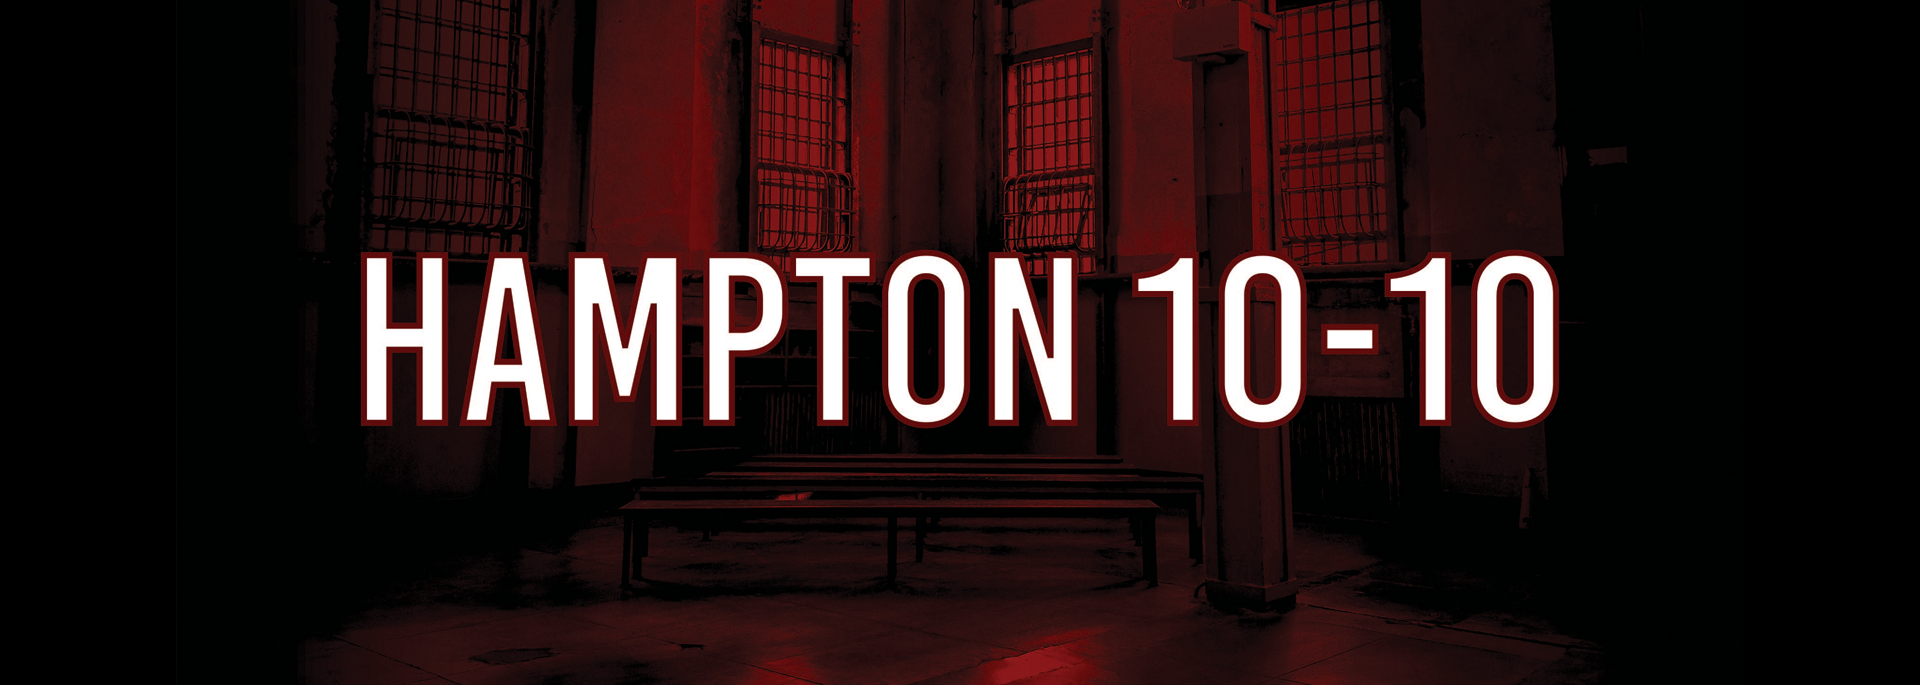 Hampton 10-10 channel